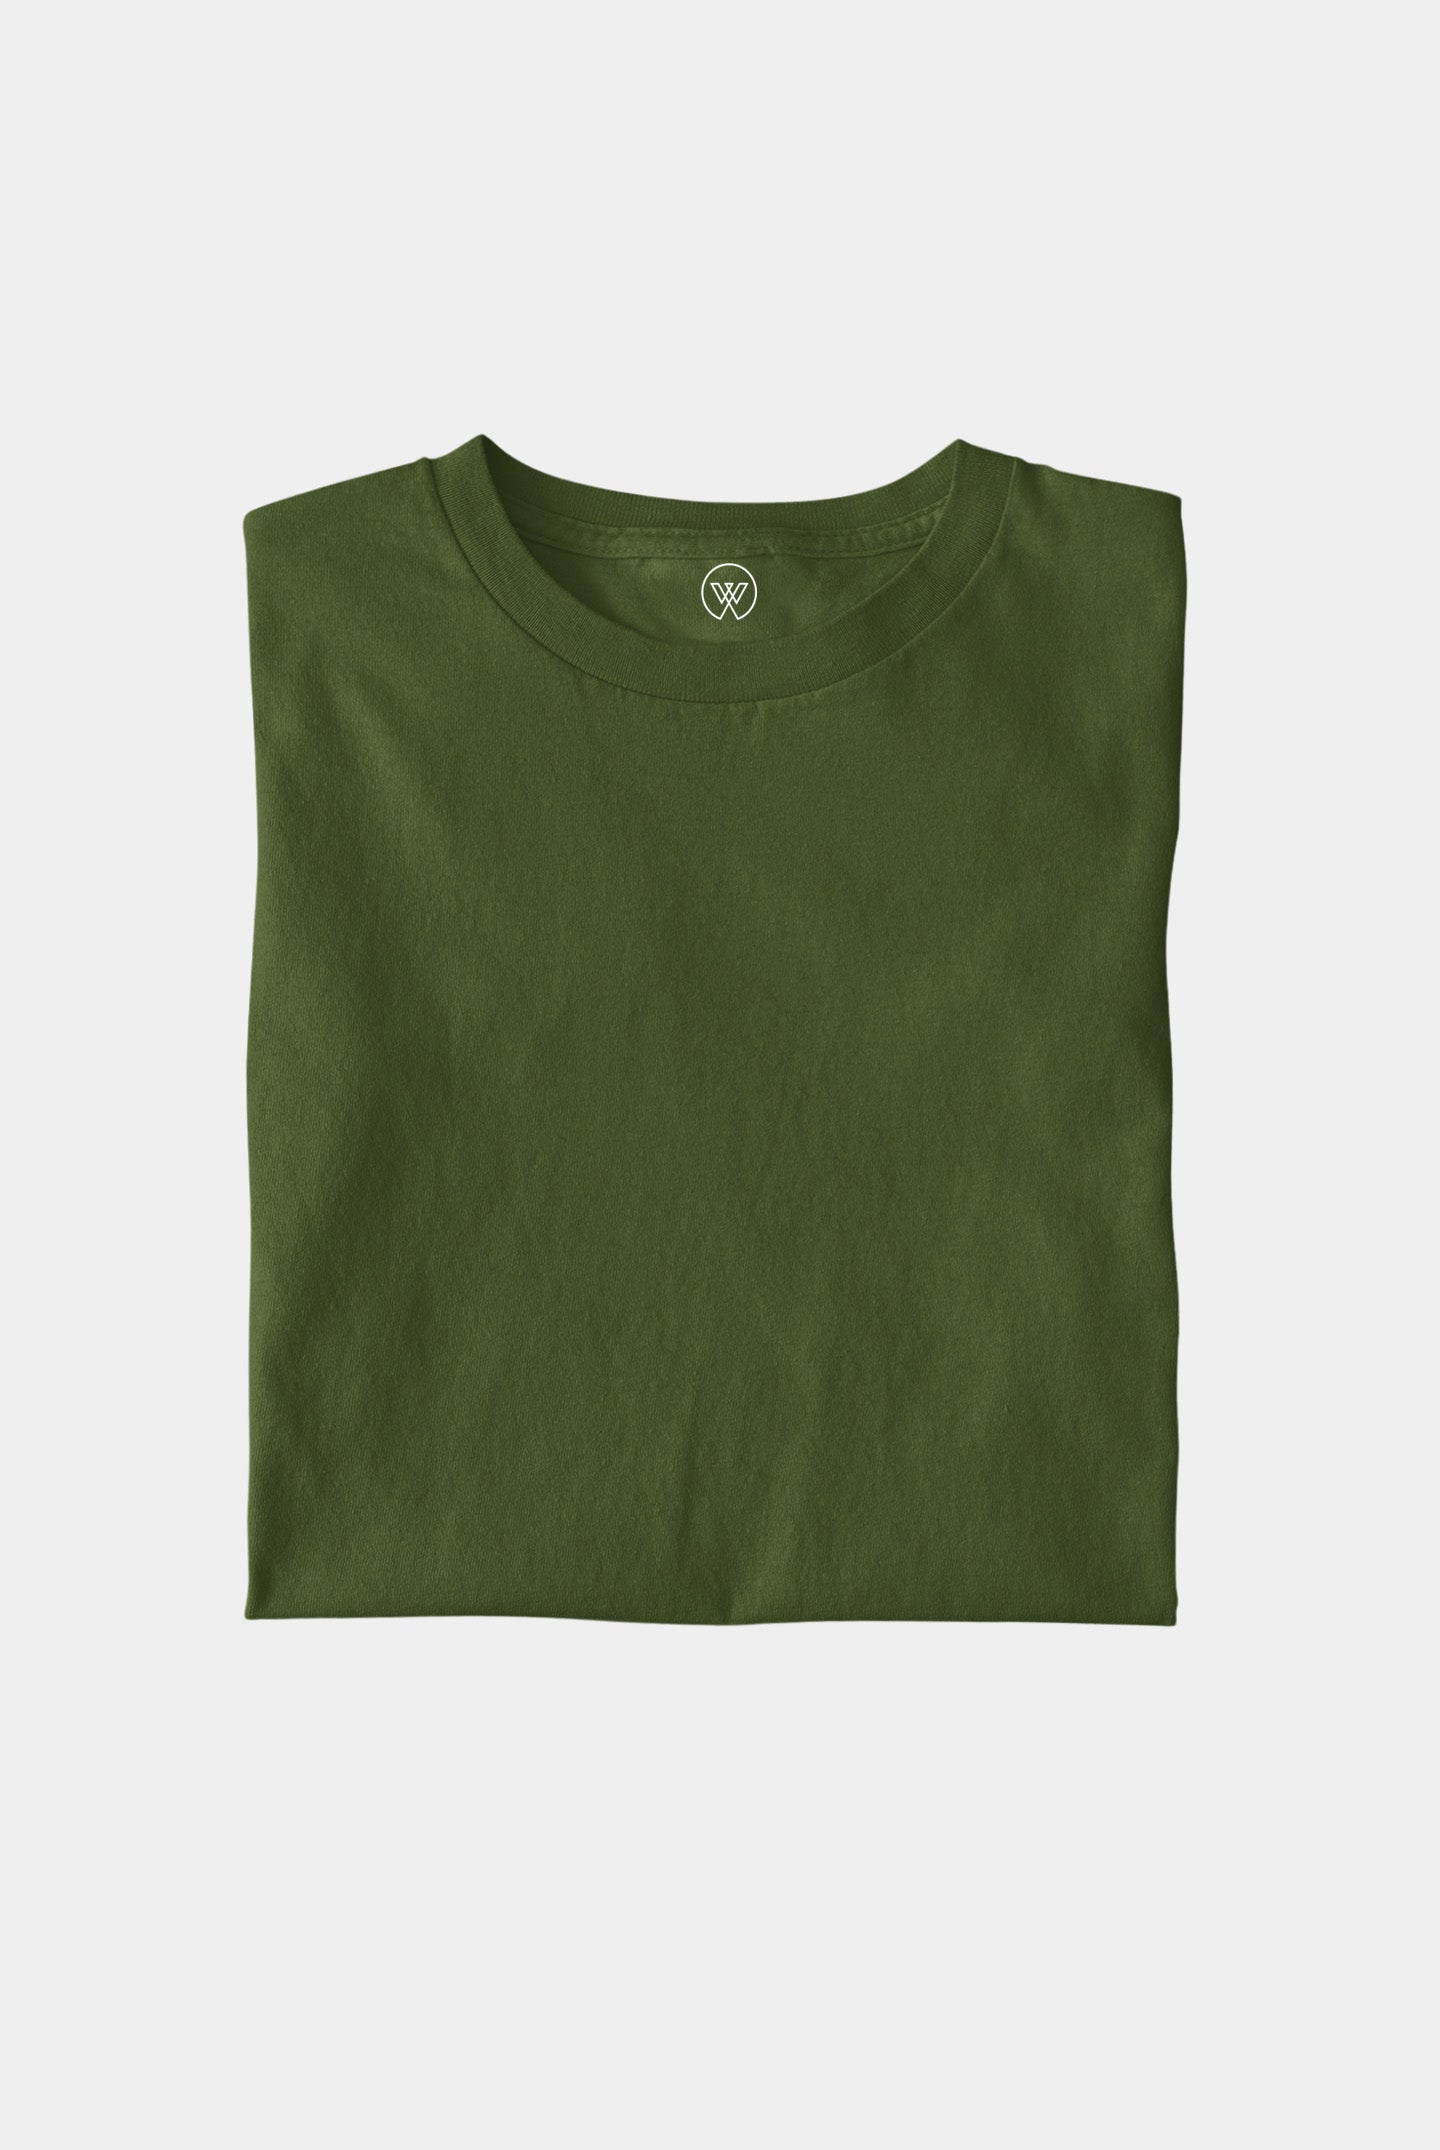 Olive Green Unisex T-shirt